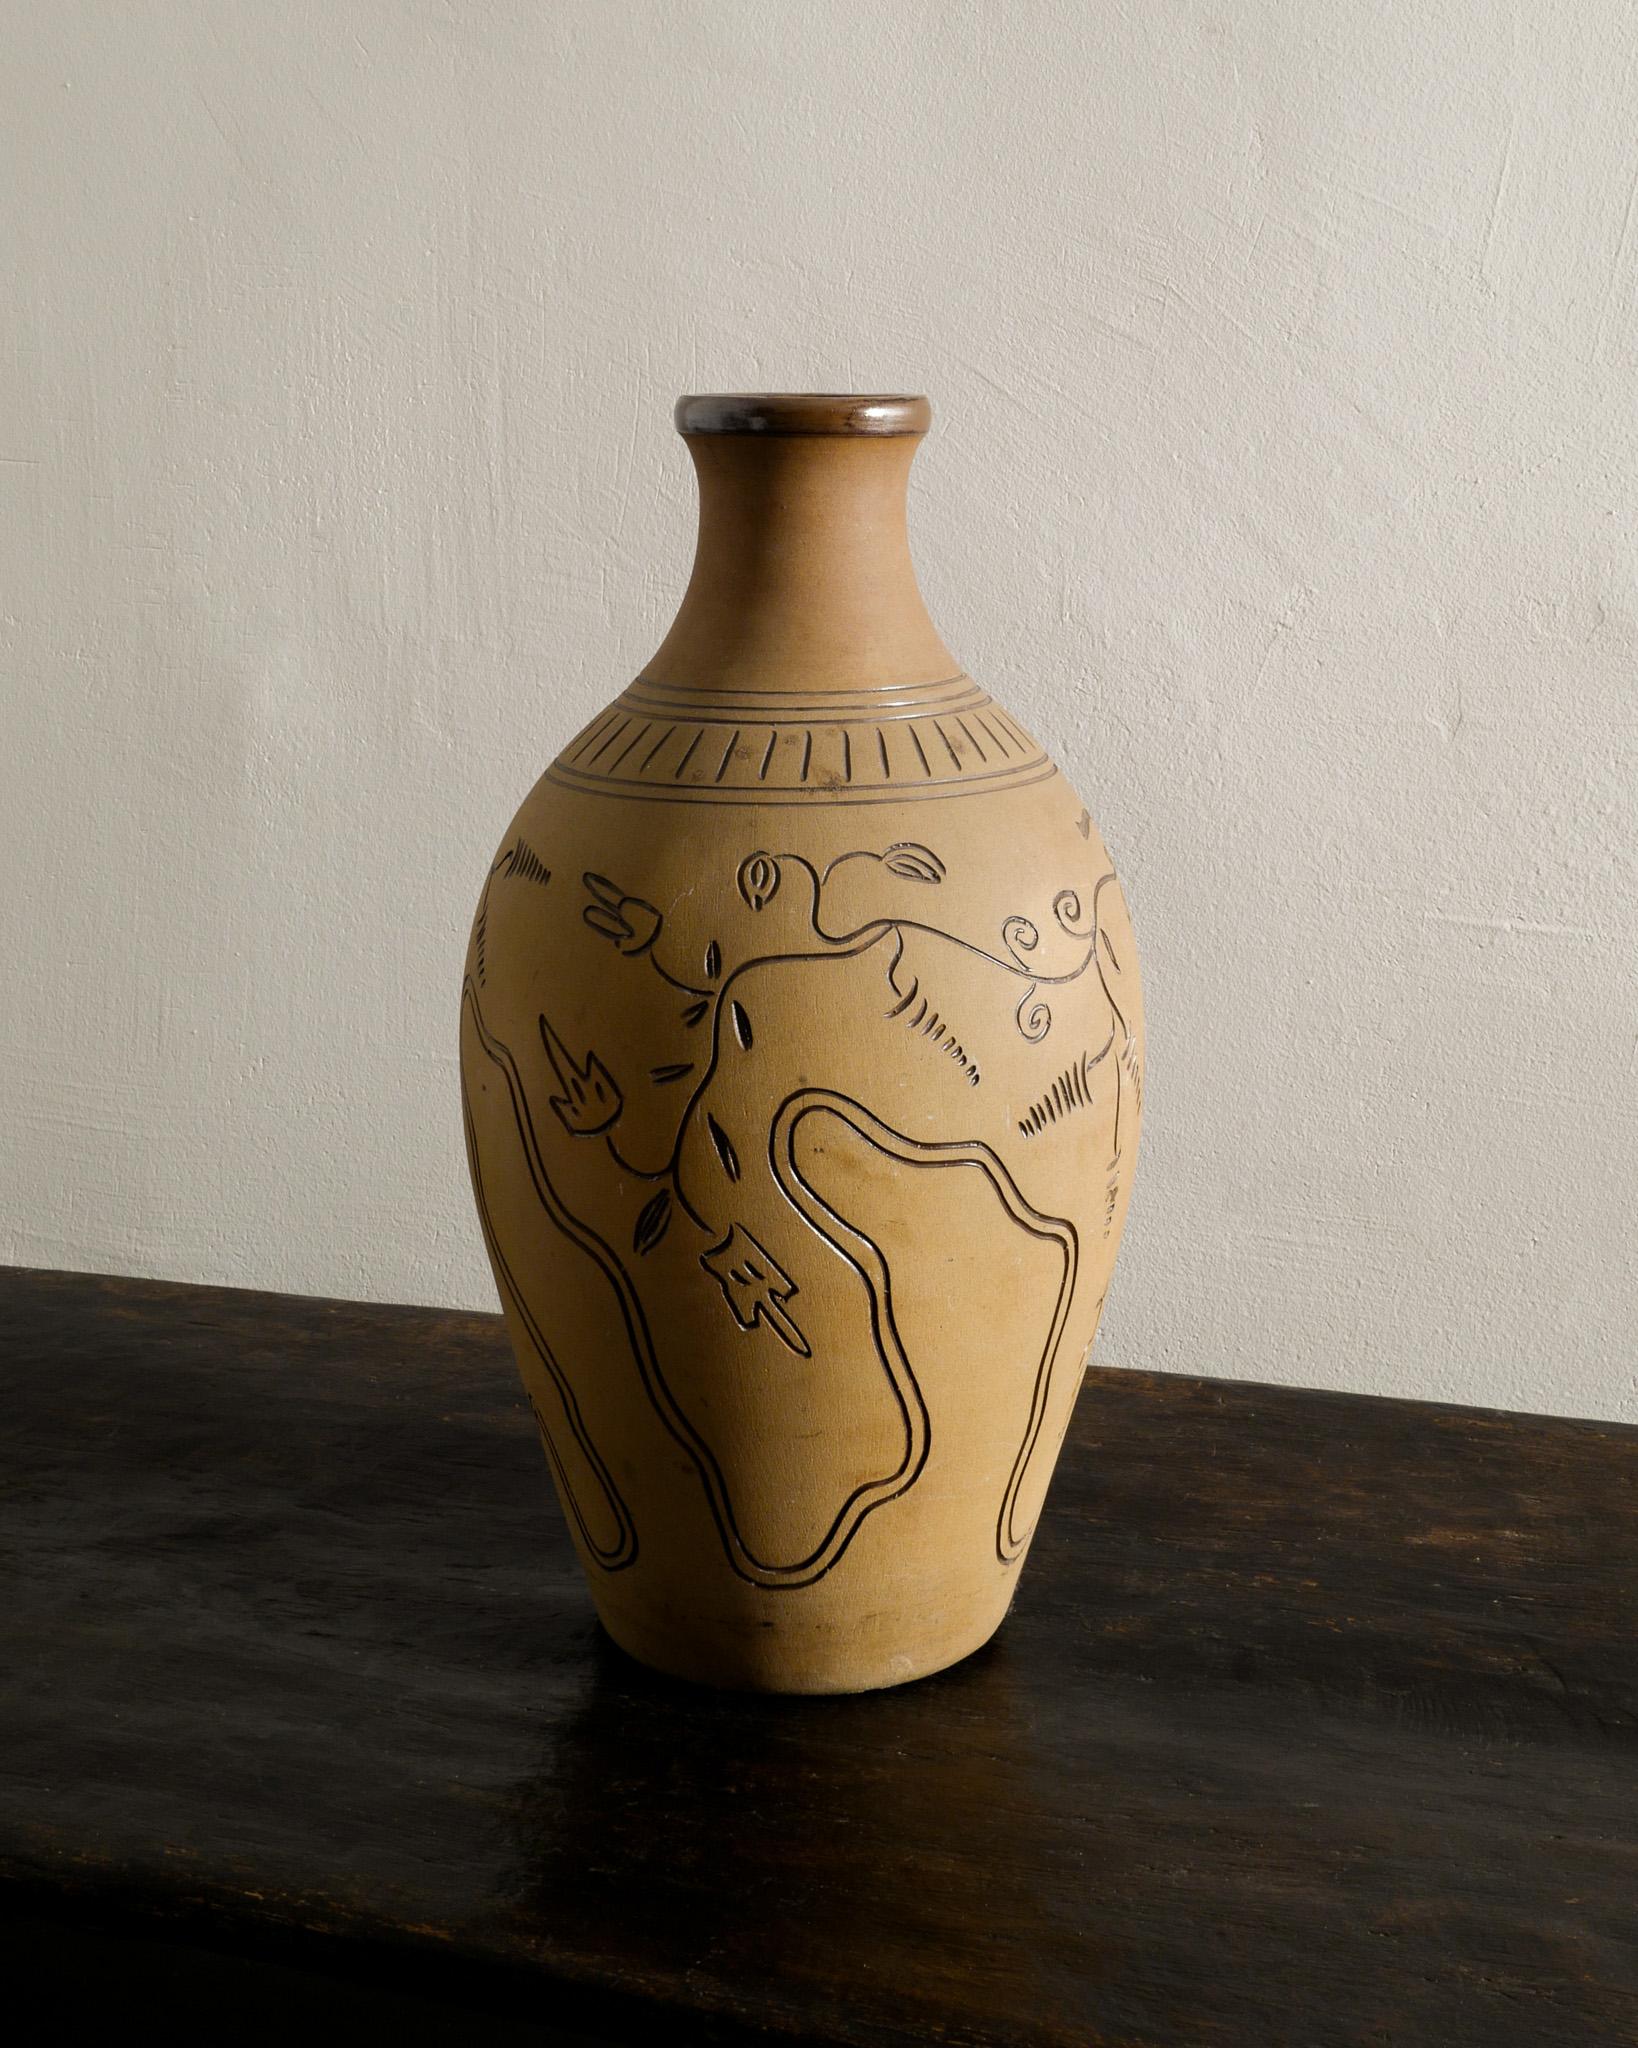 Rare Scandinavian mid century stoneware floor vase by Sven Bolin produced by Höganäs Keramik Sweden 1940s. In good original condition.
Signed. 

Dimensions: H: 52 cm / 20.5